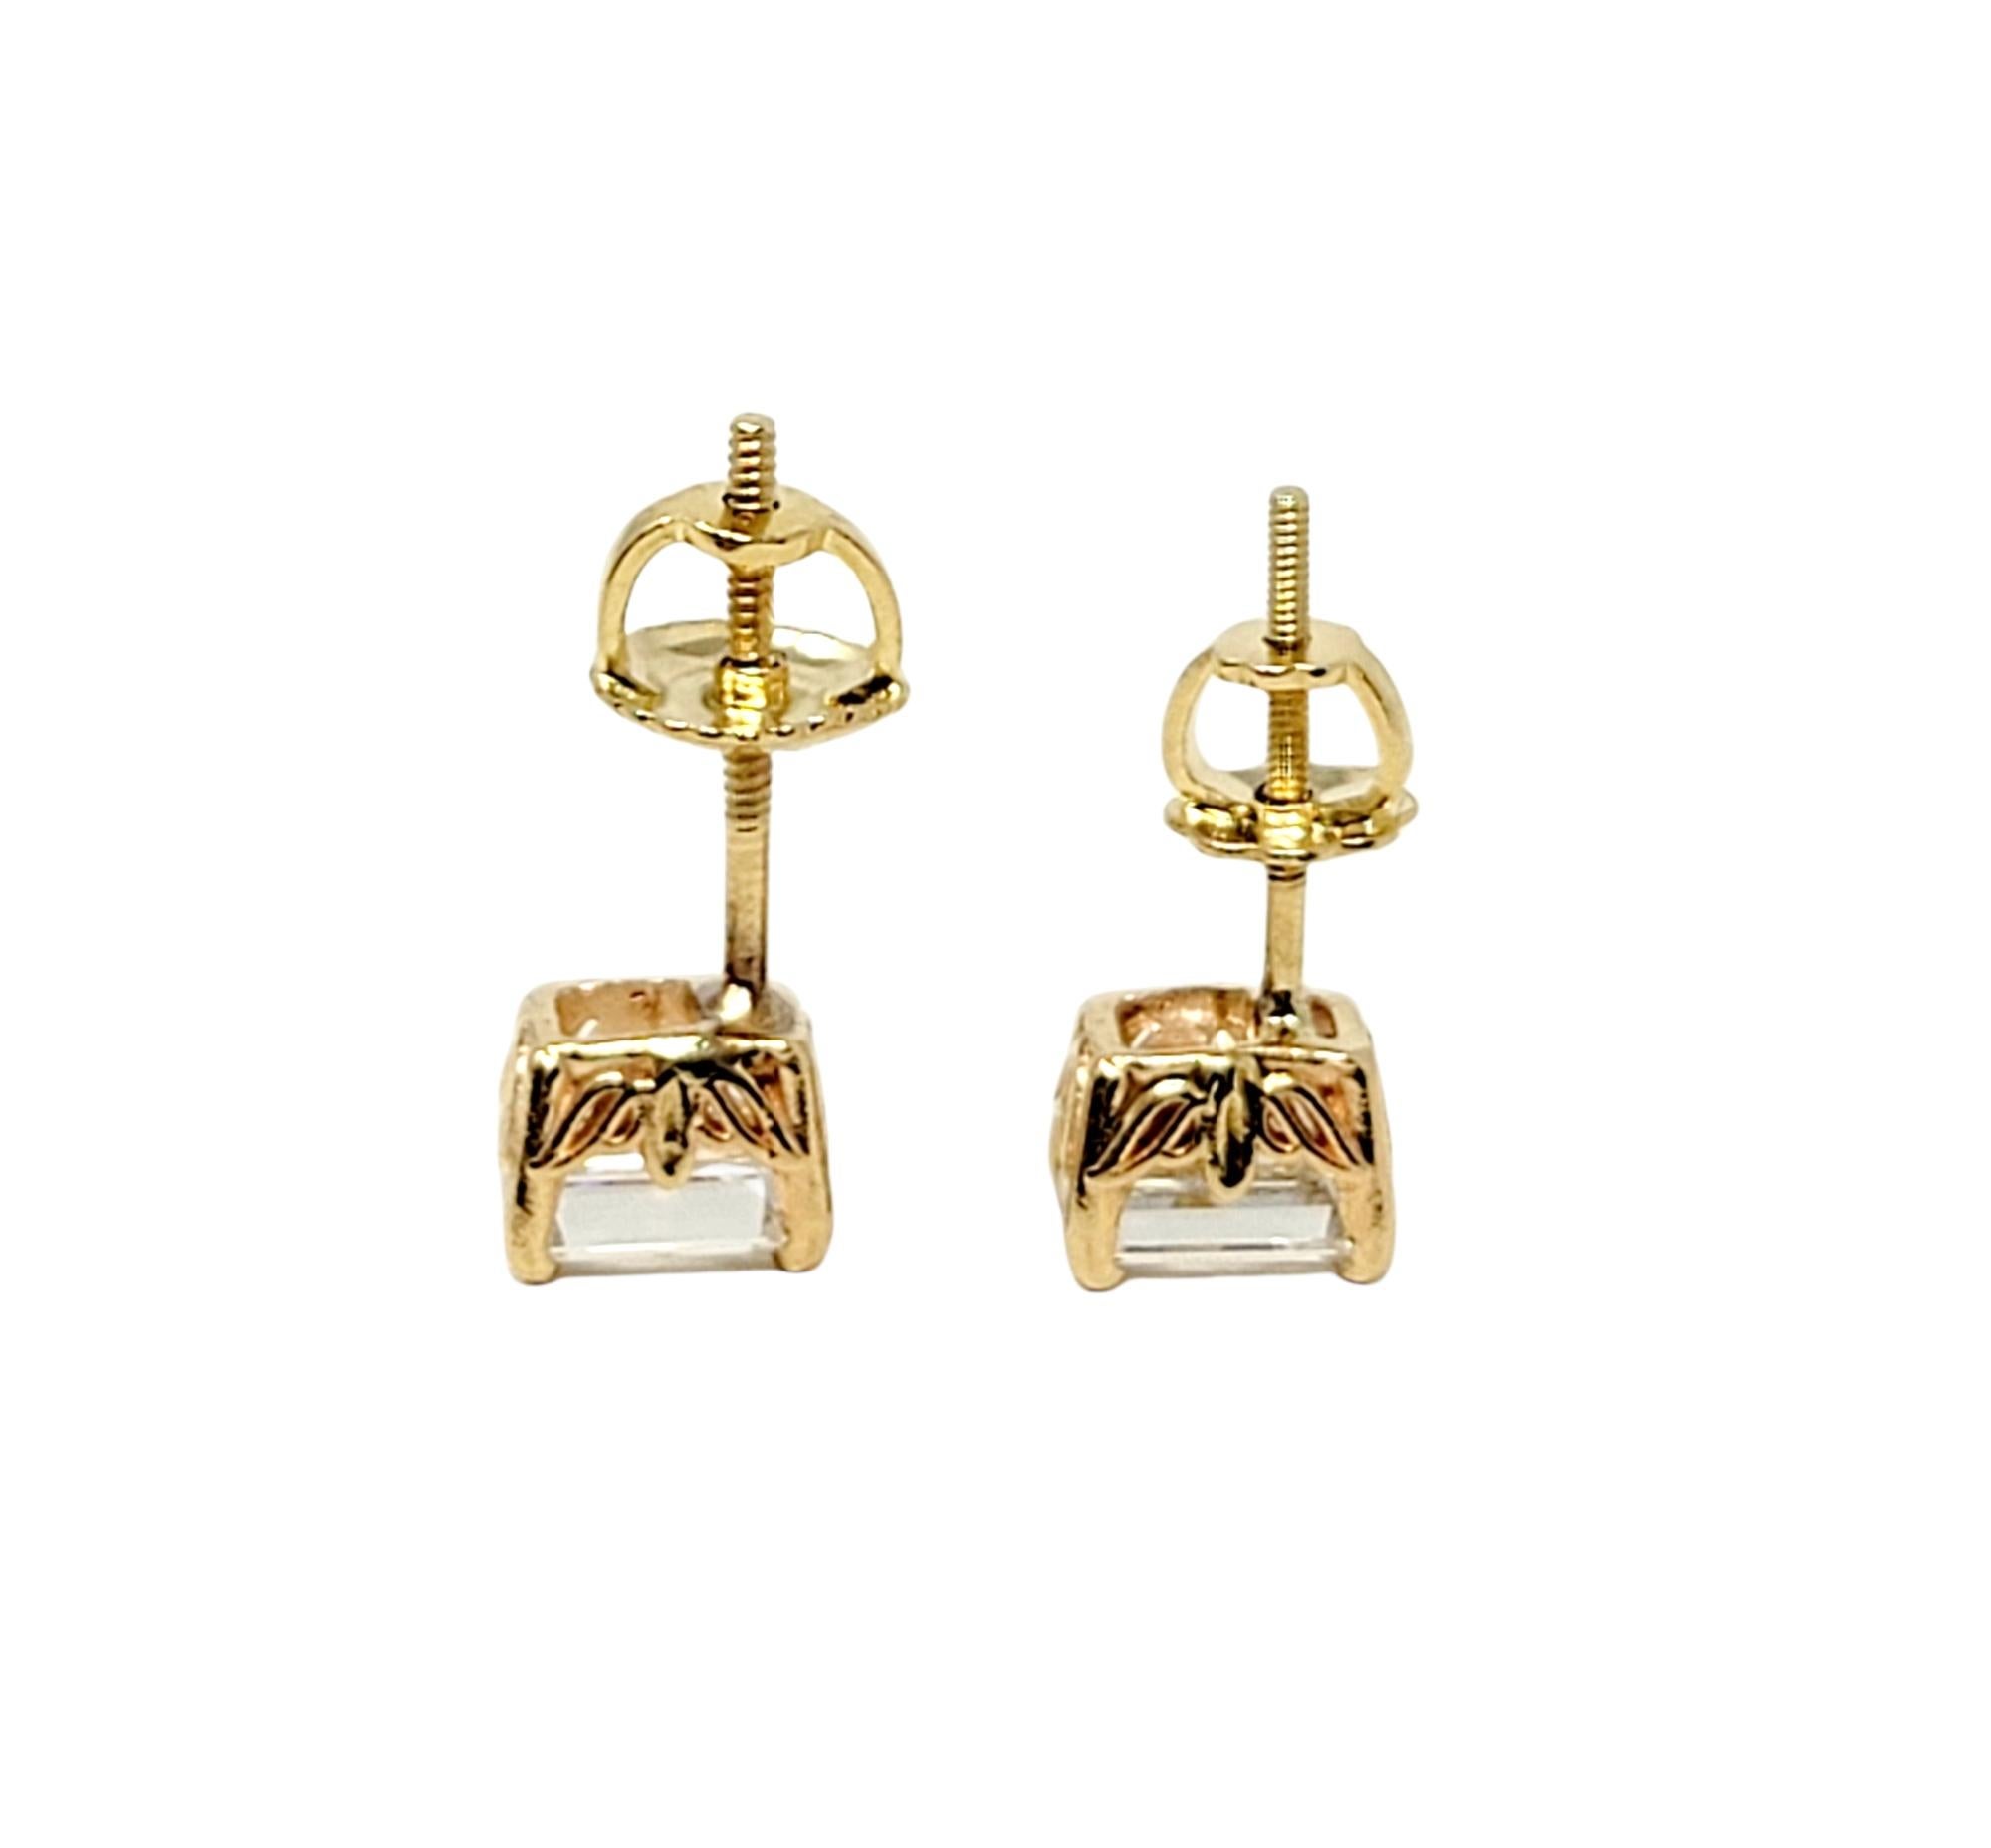 1.05 Carat Total Emerald Cut Diamond Stud Earrings in 14 Karat Yellow Gold For Sale 7